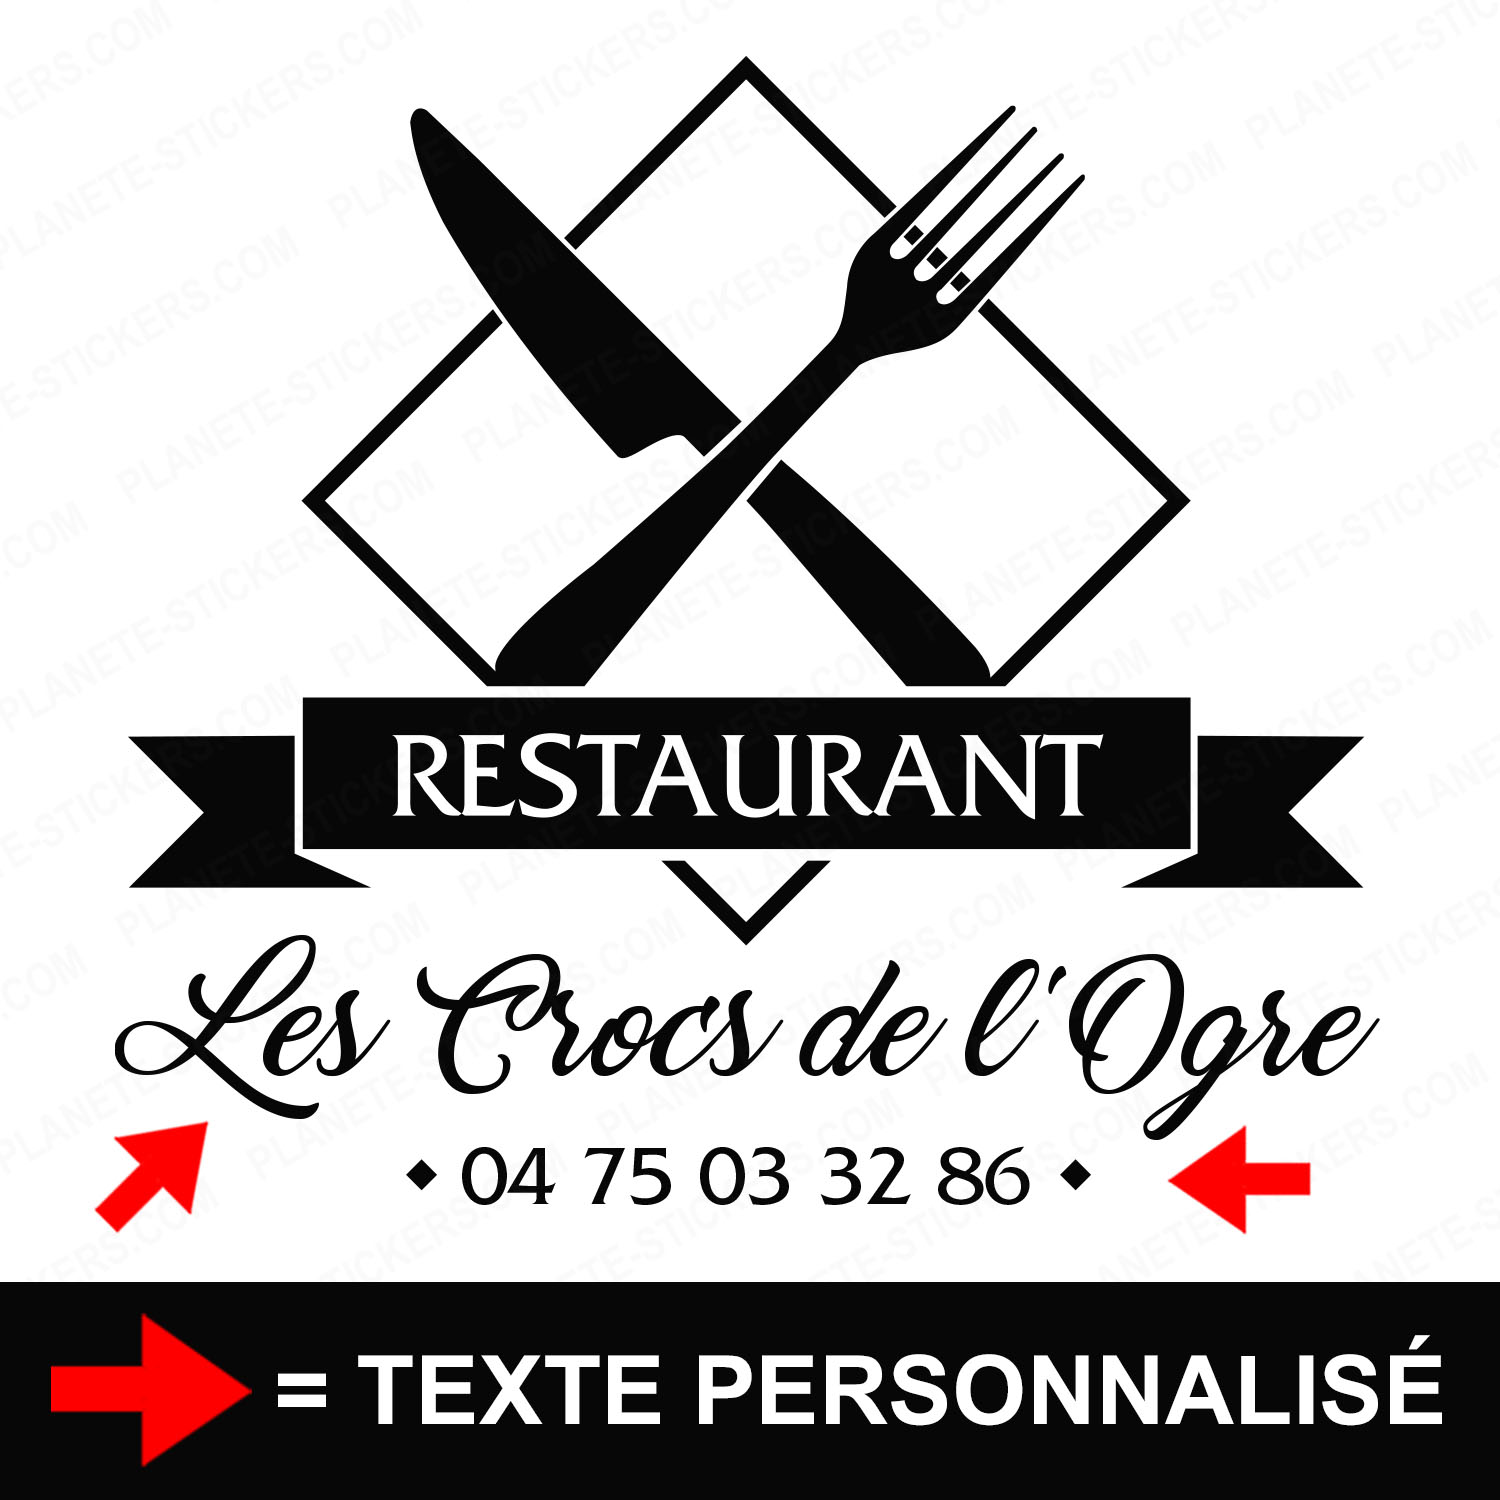 ref15restaurantvitrine-stickers-restaurant-vitrine-restaurant-sticker-personnalisé-autocollant-pro-restaurateur-vitre-resto-professionnel-logo-couverts-2